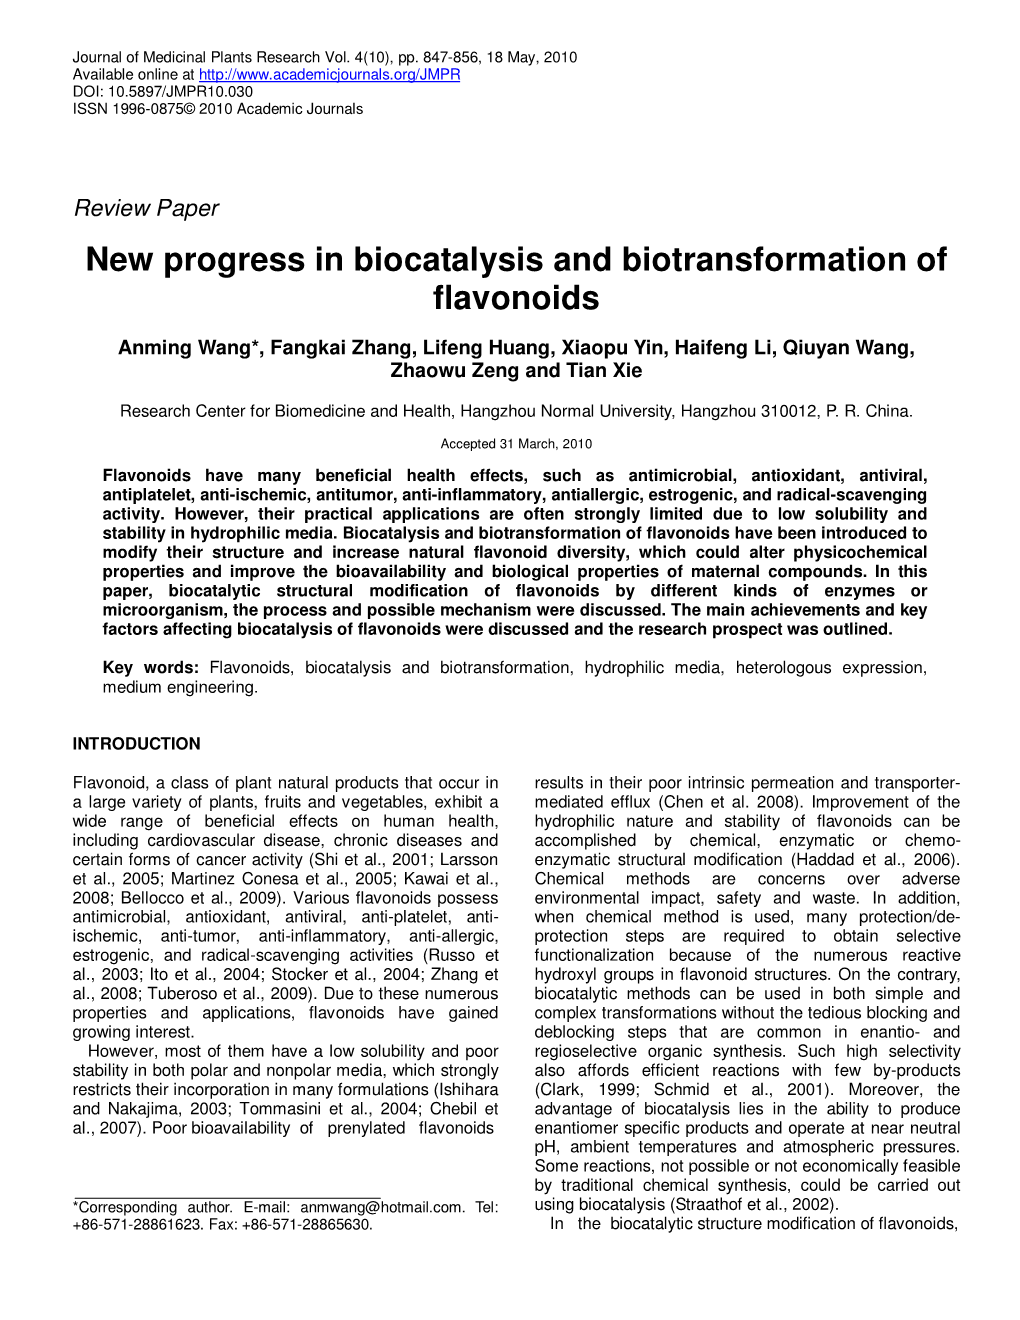 New Progress in Biocatalysis and Biotransformation of Flavonoids